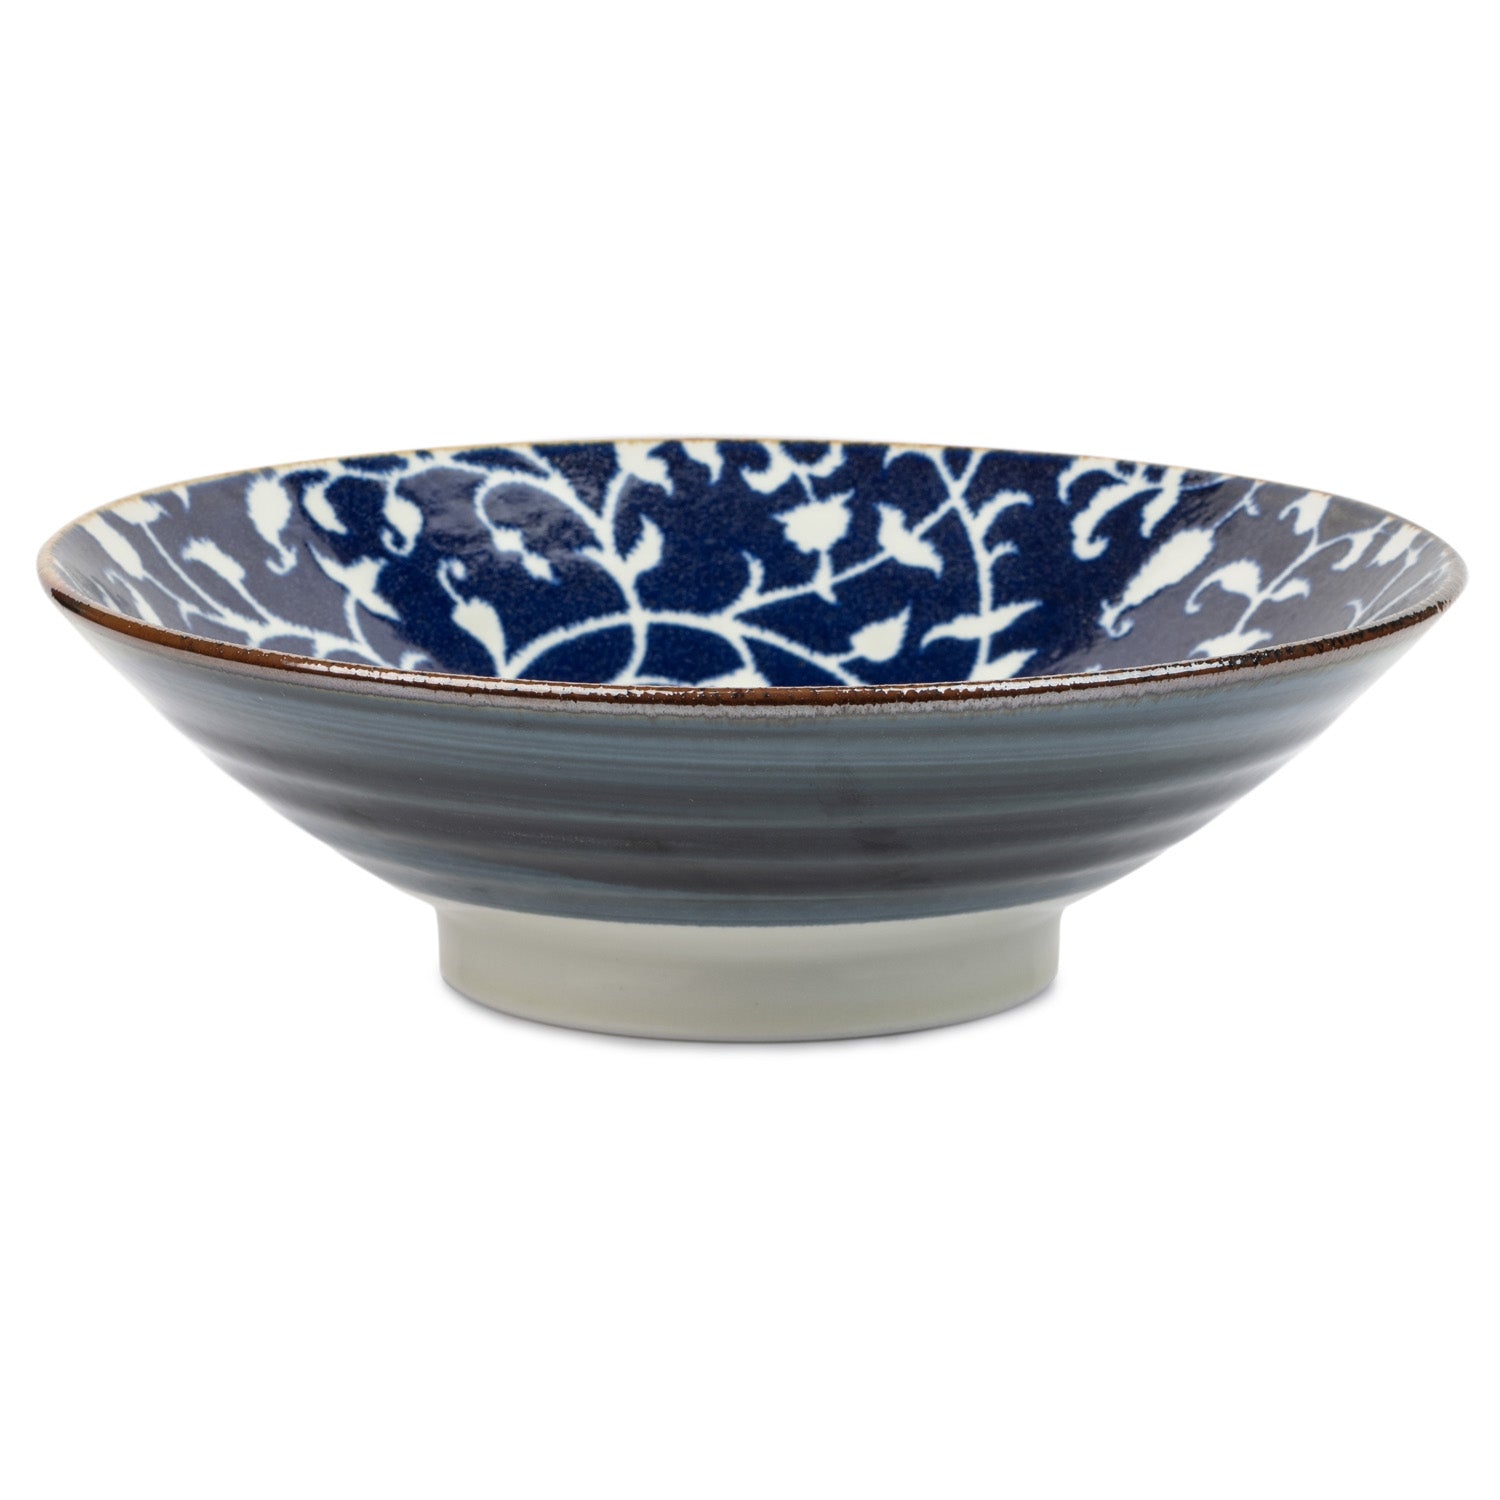 Indigo Blue and White Floral Large Japanese Serving Bowl